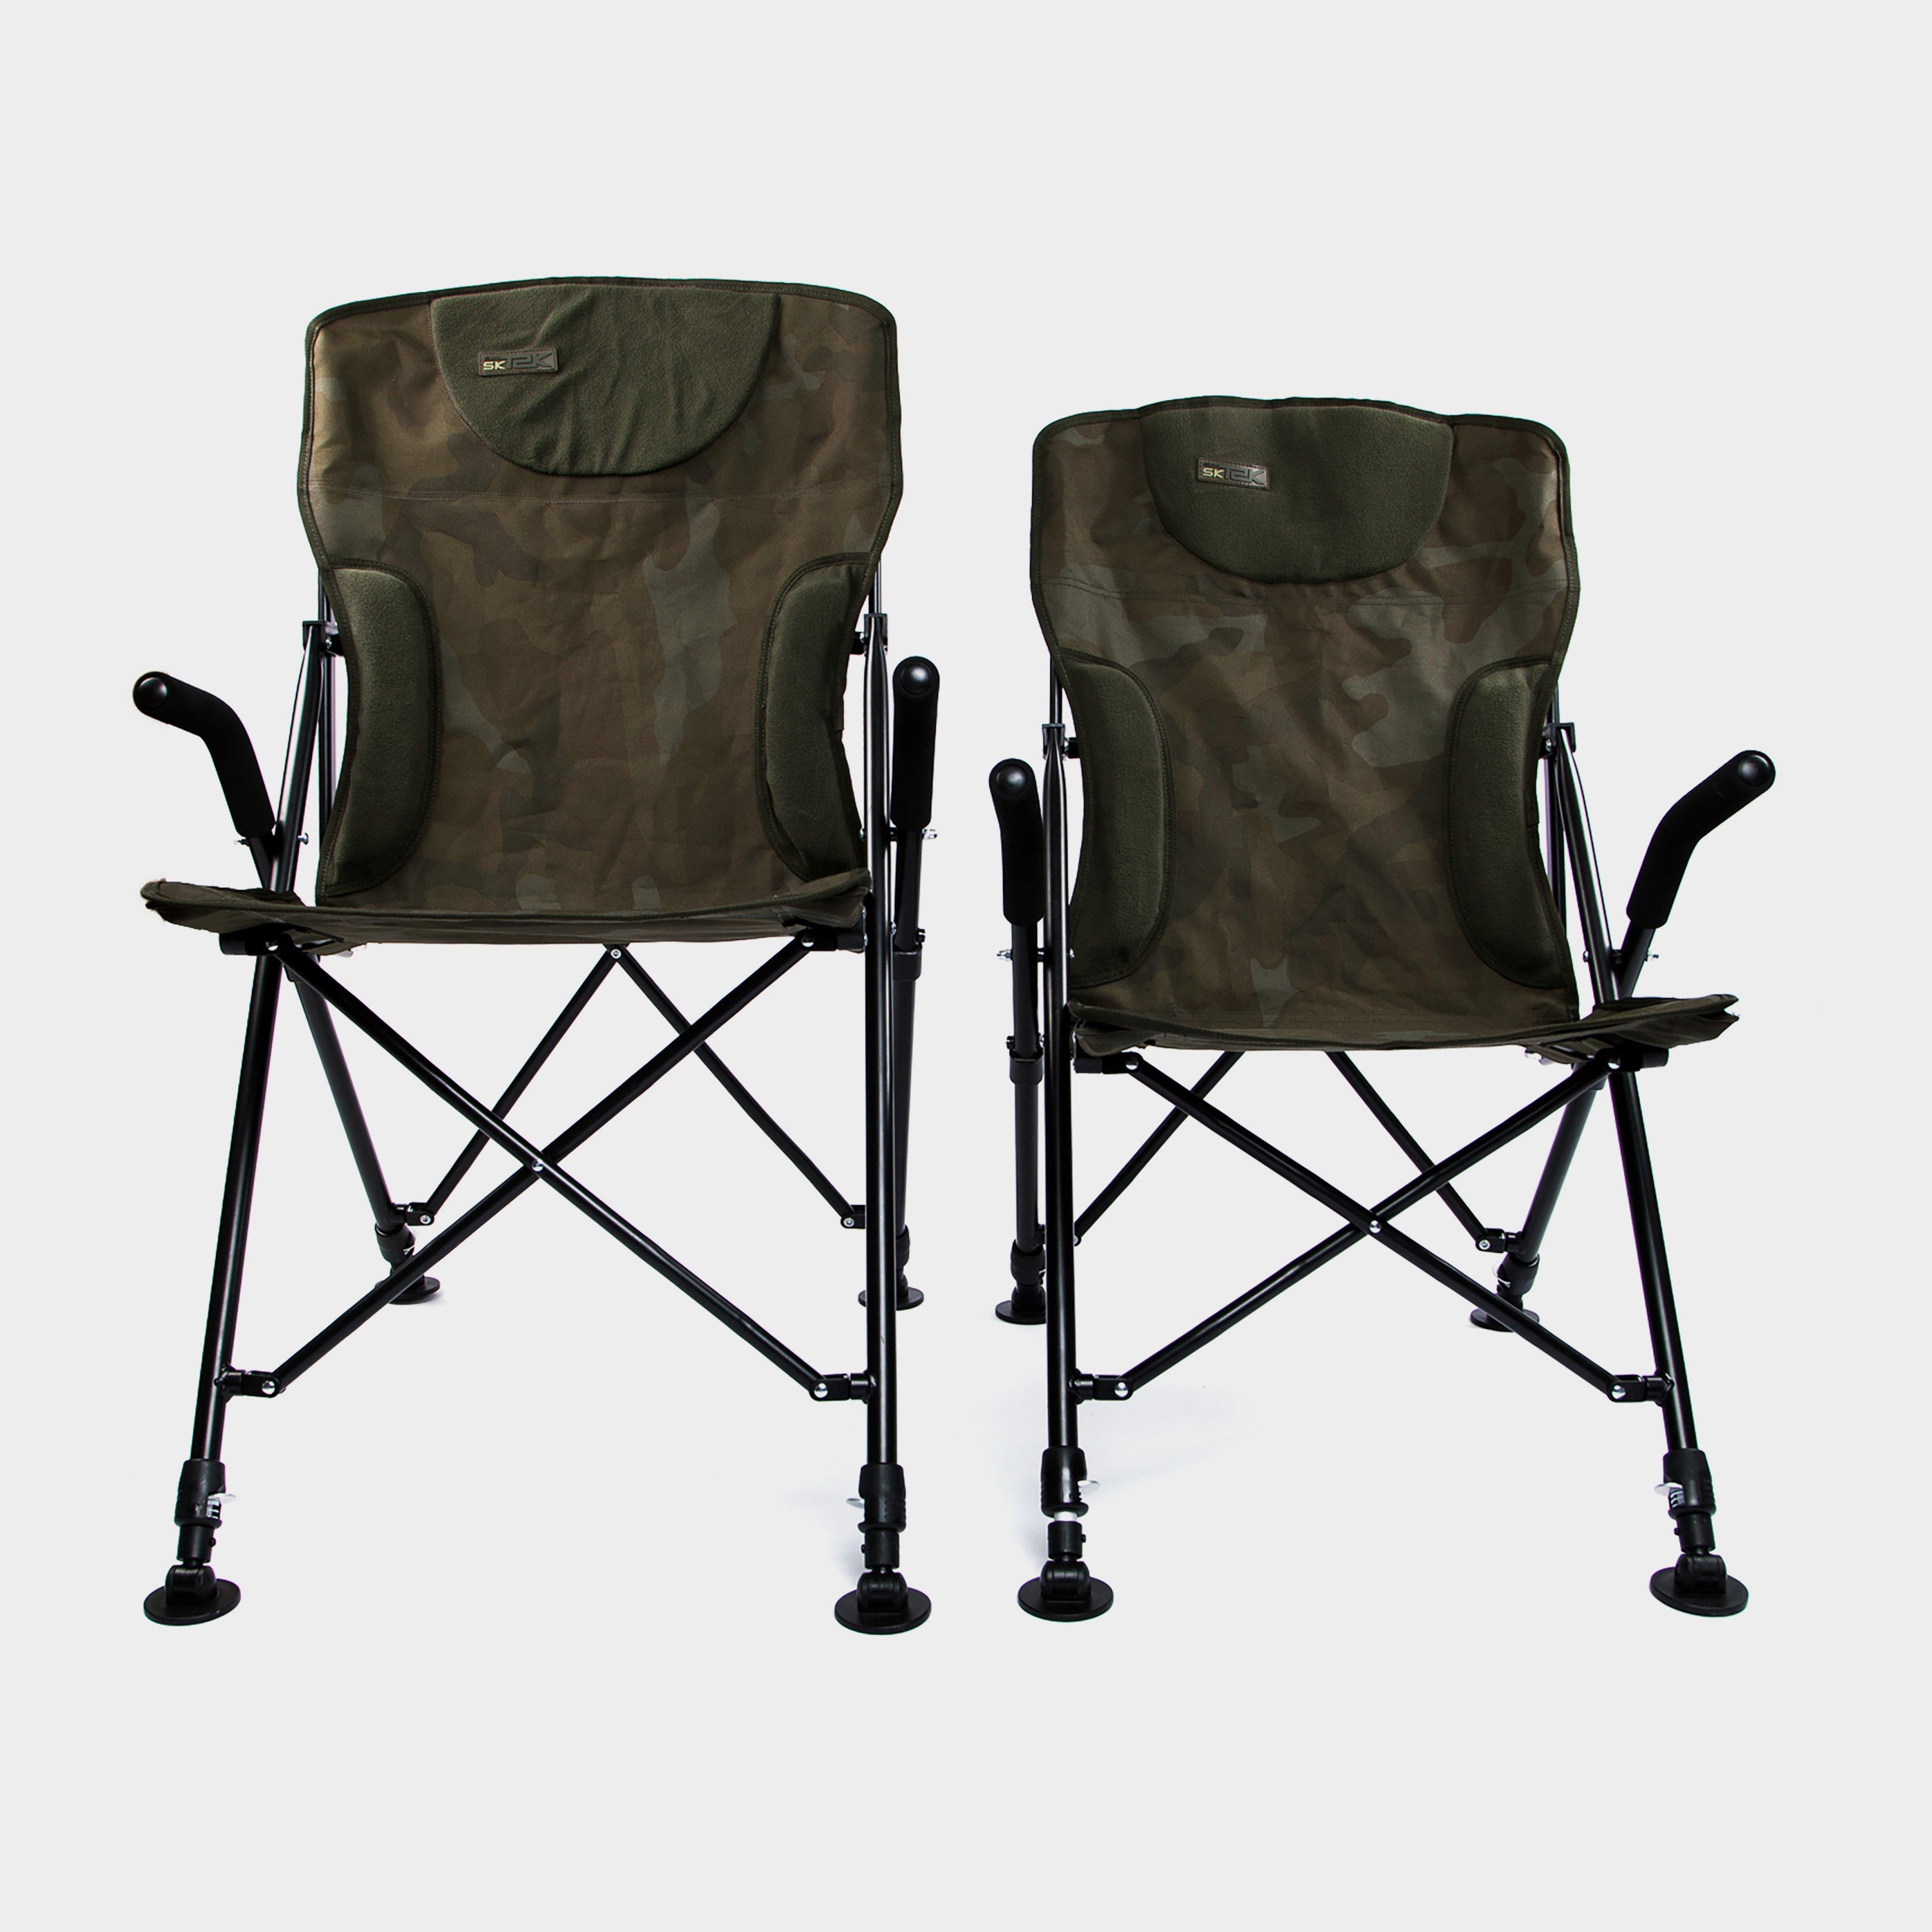  Sonik SK-TEK Folding Chair Compact